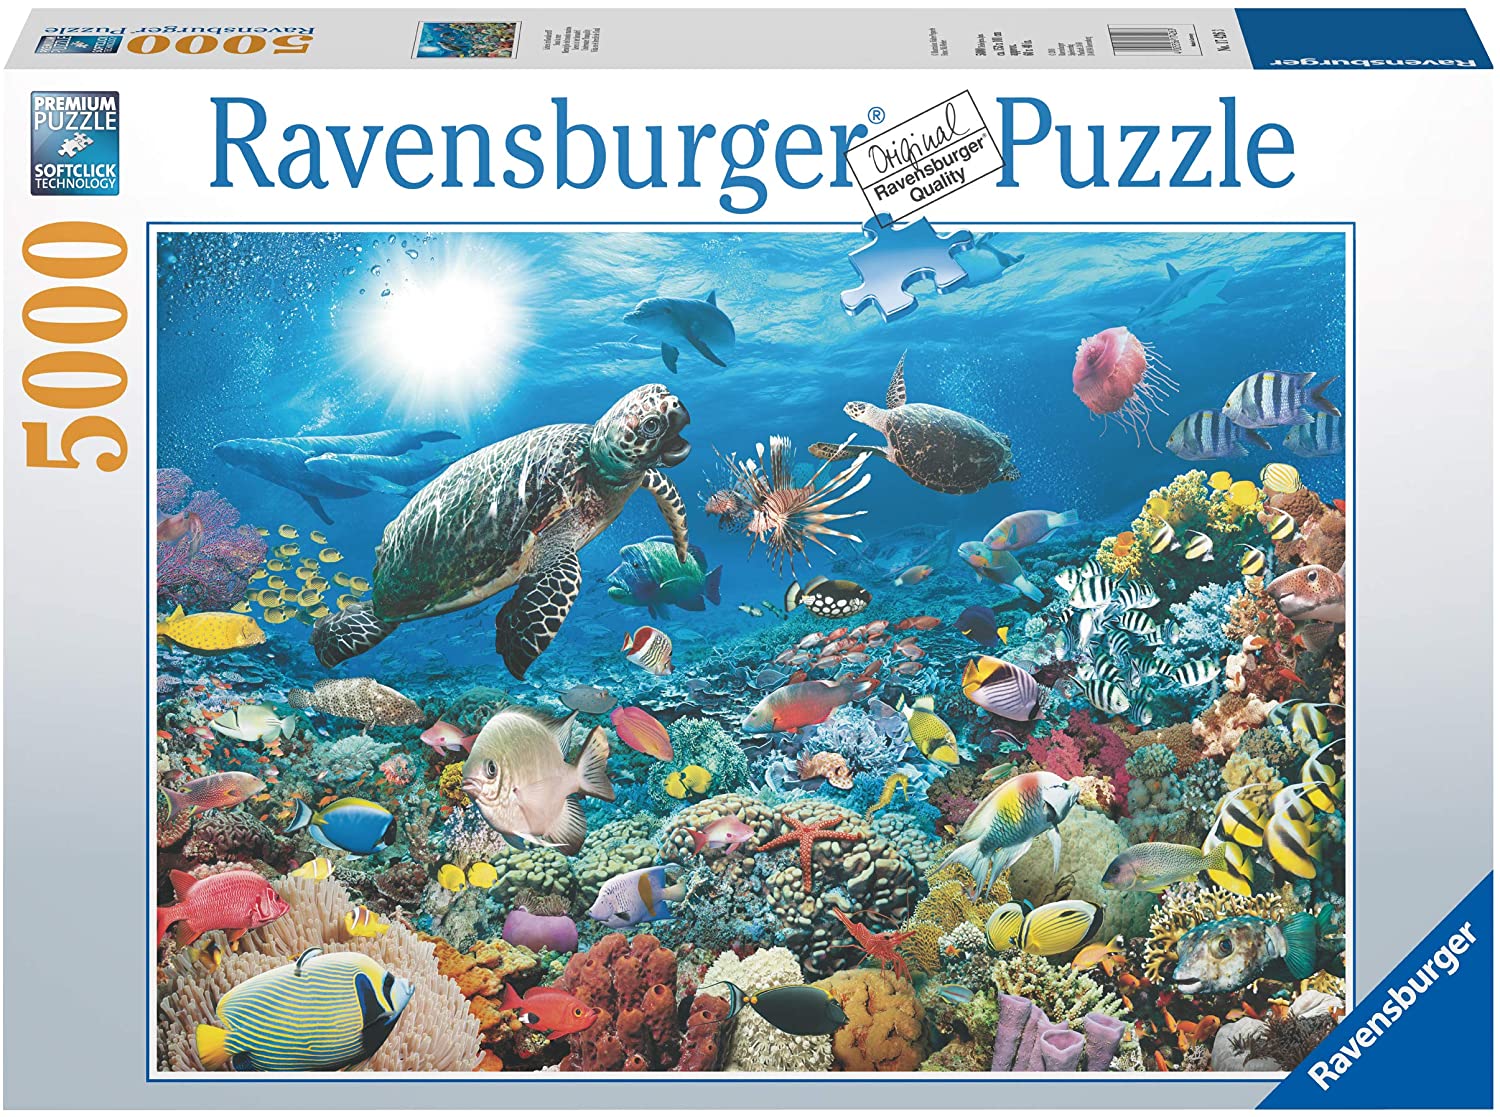 Ravensburger Underwater Tranquility 5000 Piece Puzzle